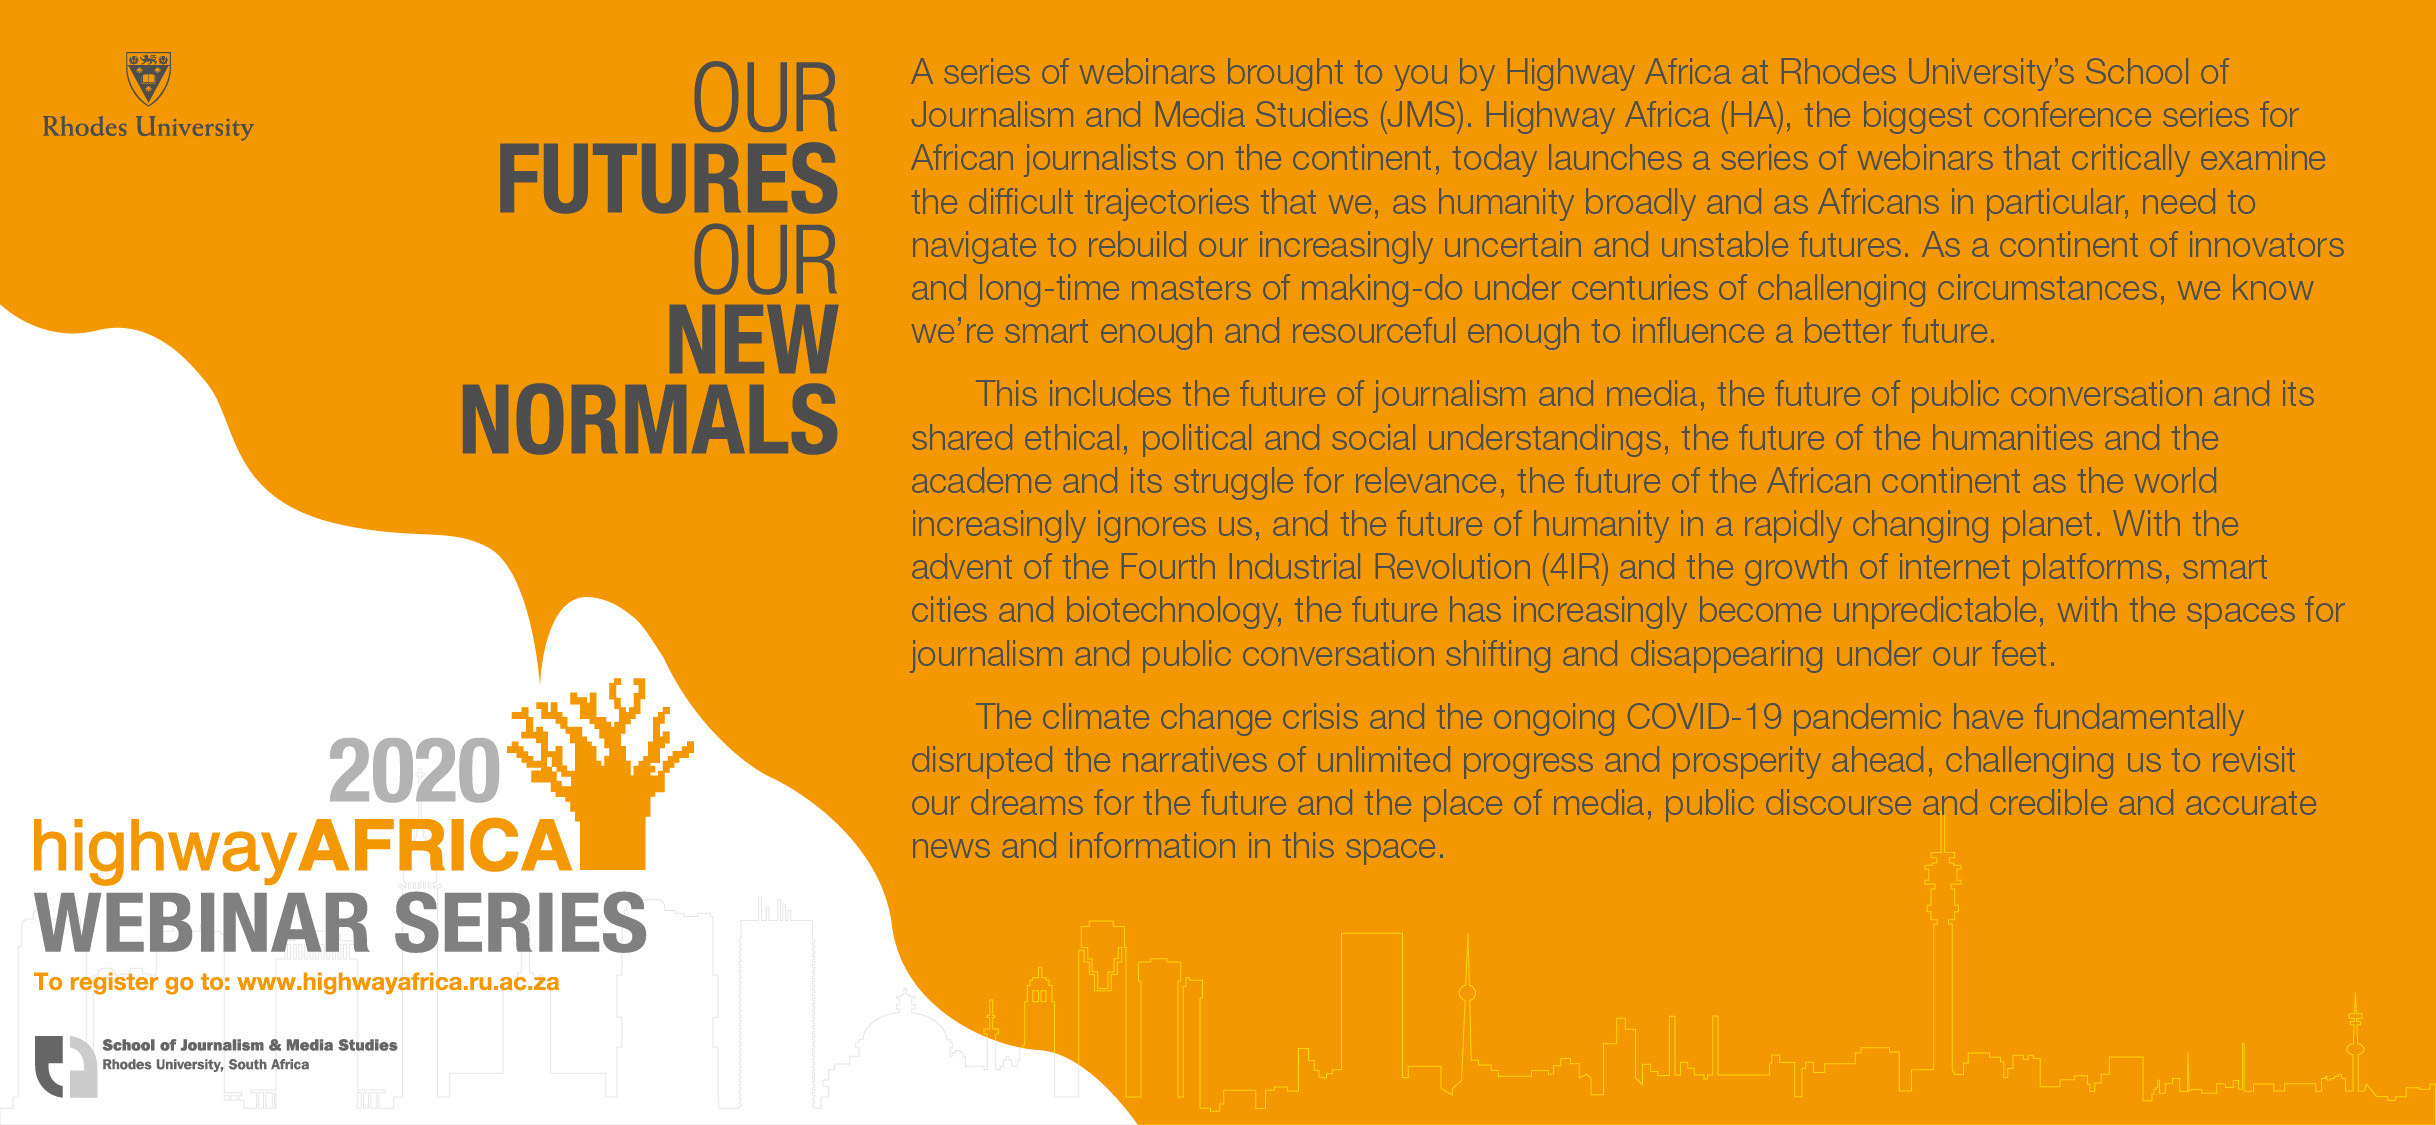 Highway Africa launches high-level media webinars